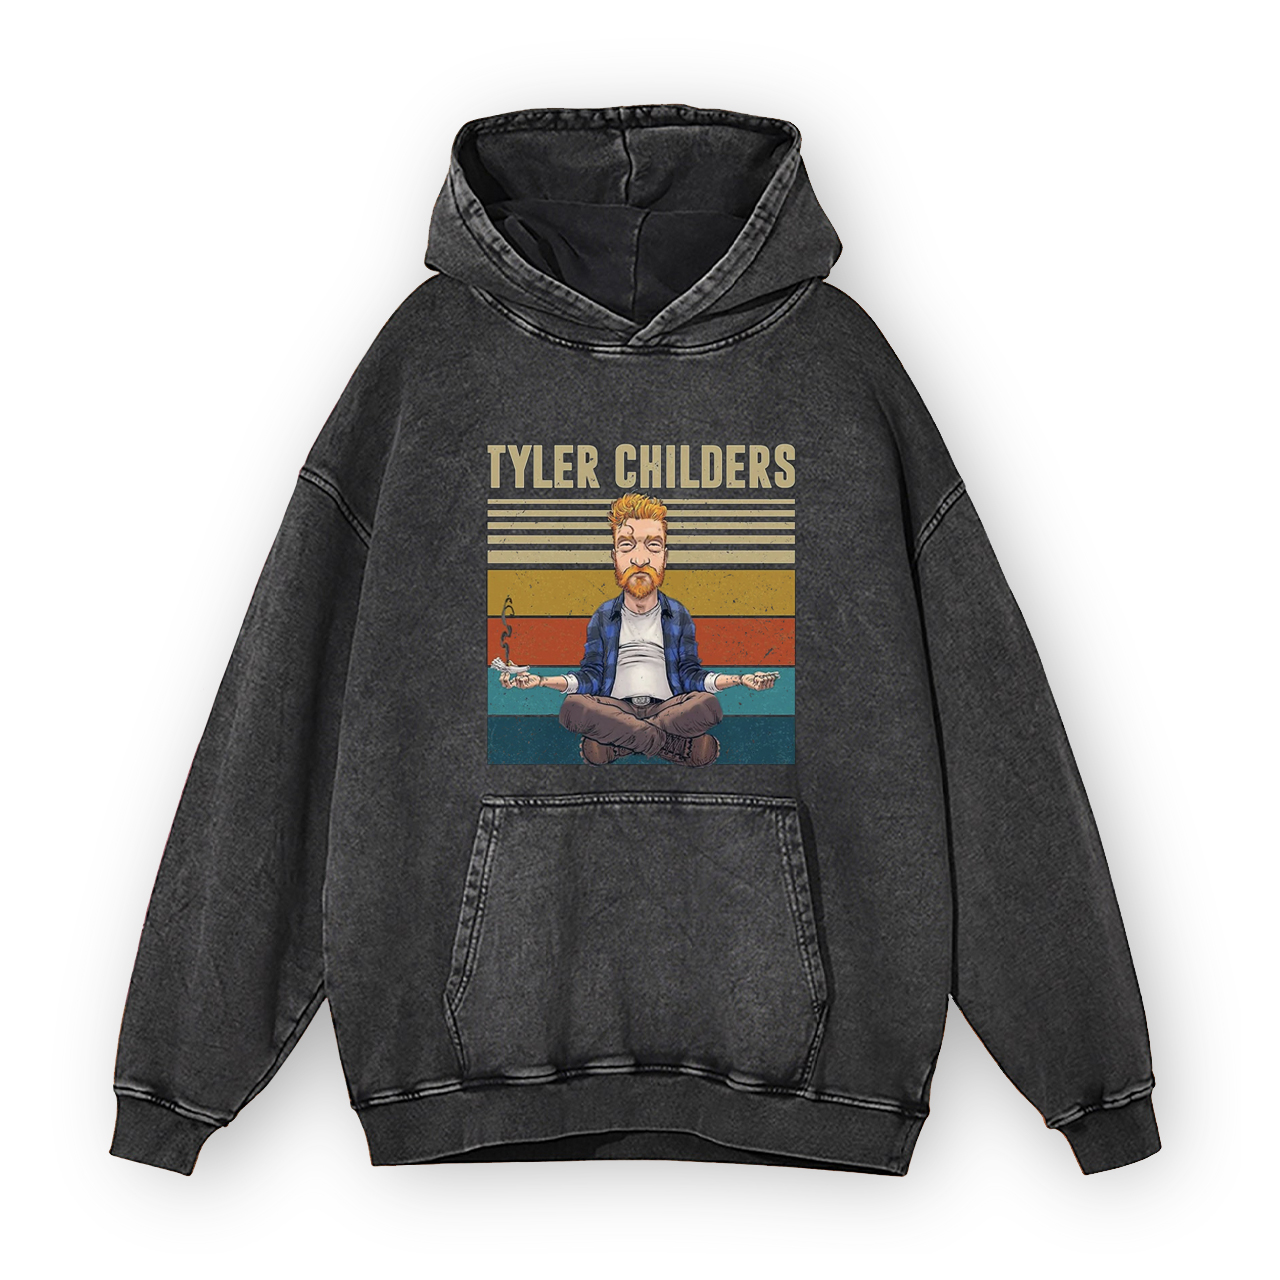 Tyler Childers Way of the Triune God Garment-Dye Hoodies